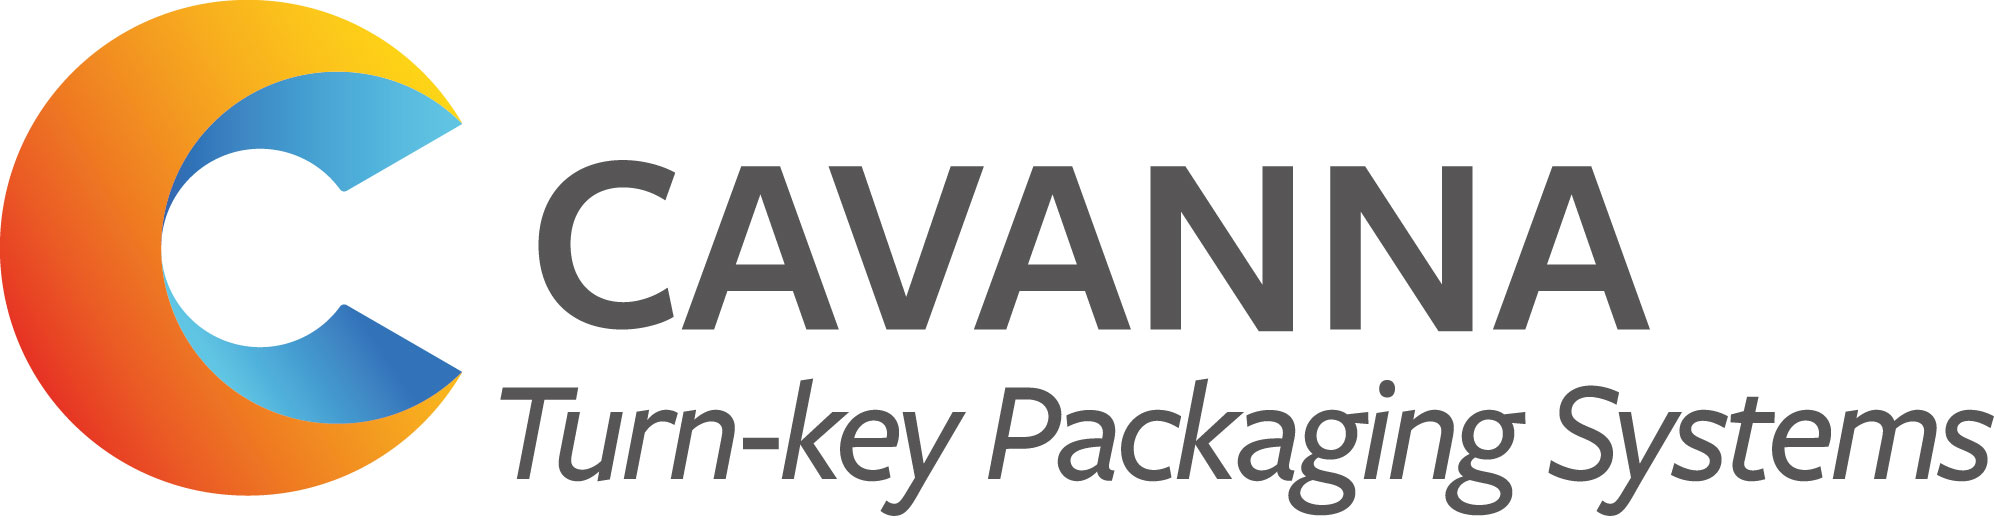 Cavanna-logo.jpg